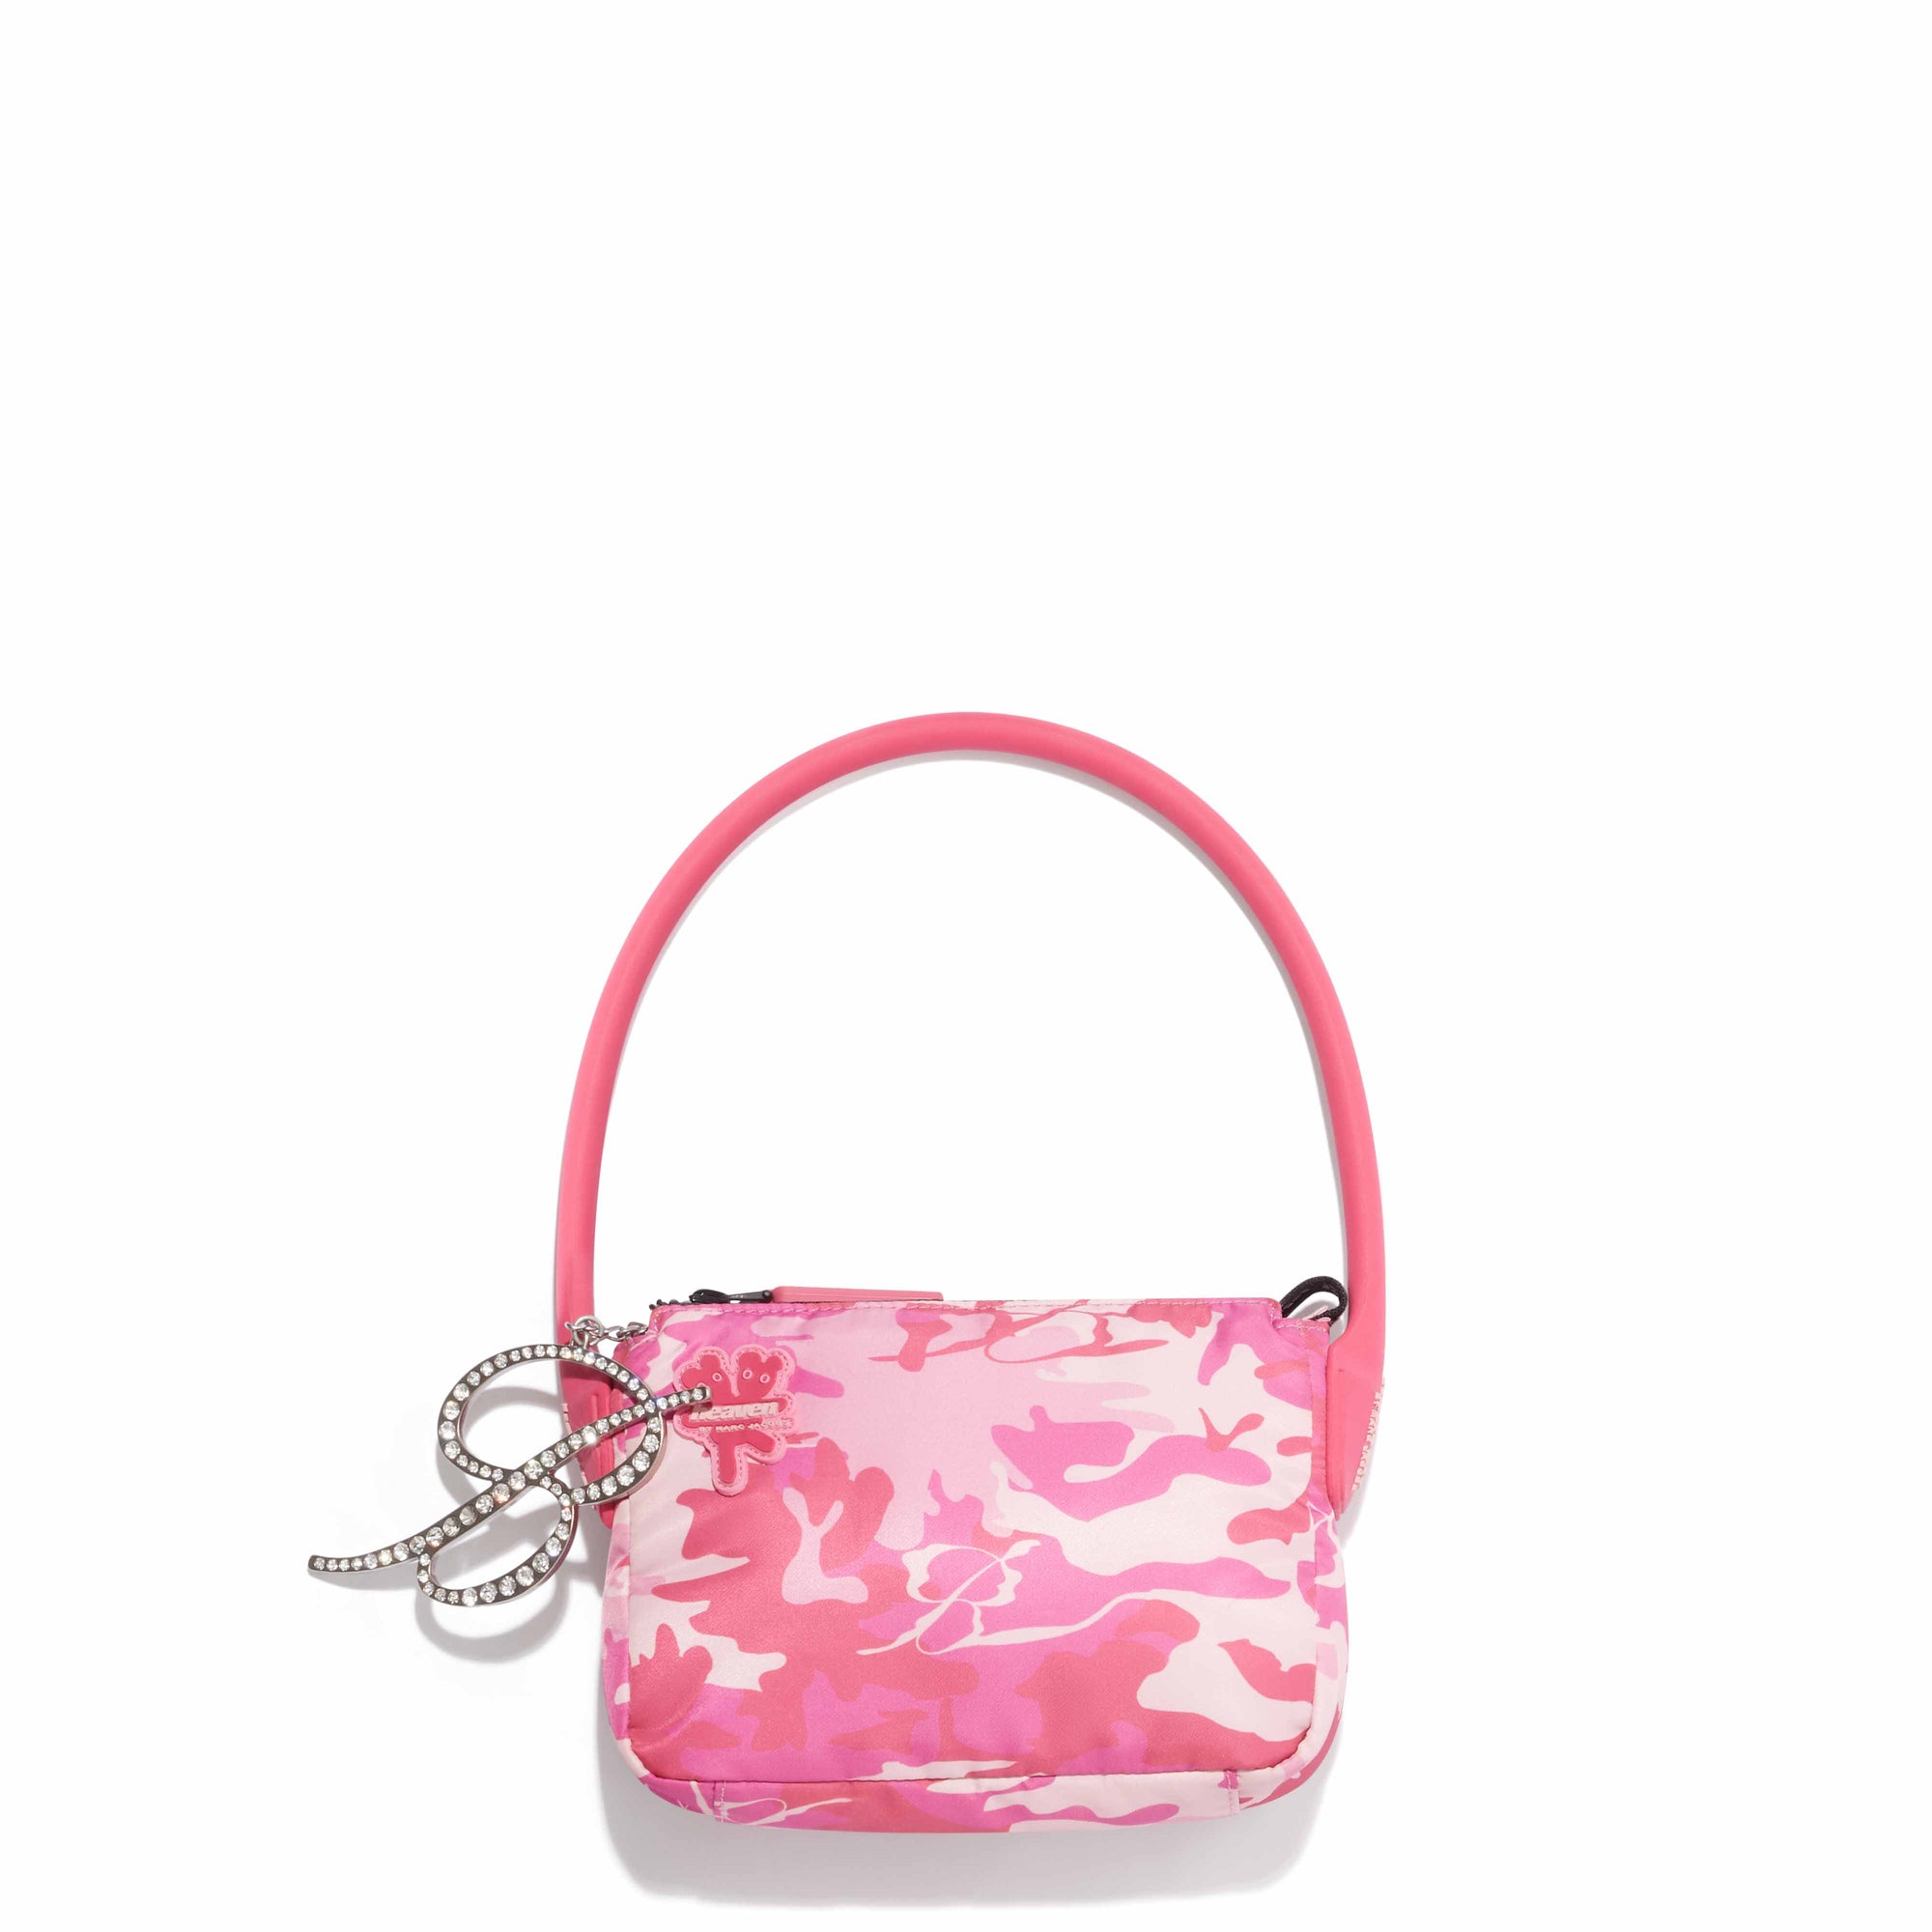 Blumarine by Marc Jacobs - Women’s Blumarine Mini Shoulder Bag - (Pink Multi) view 1